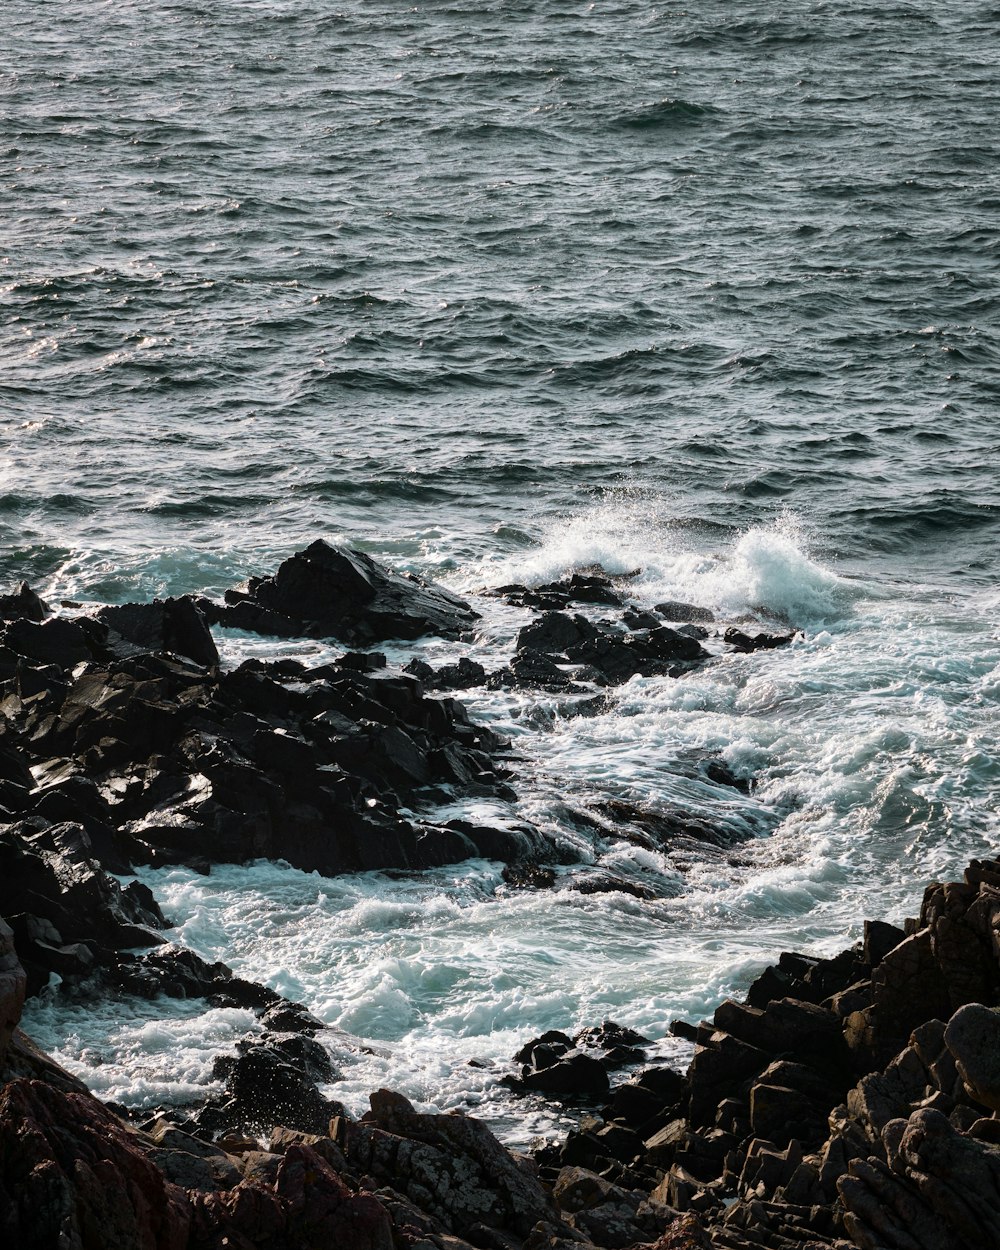 black rocky shore with ocean waves crashing on rocks during daytime